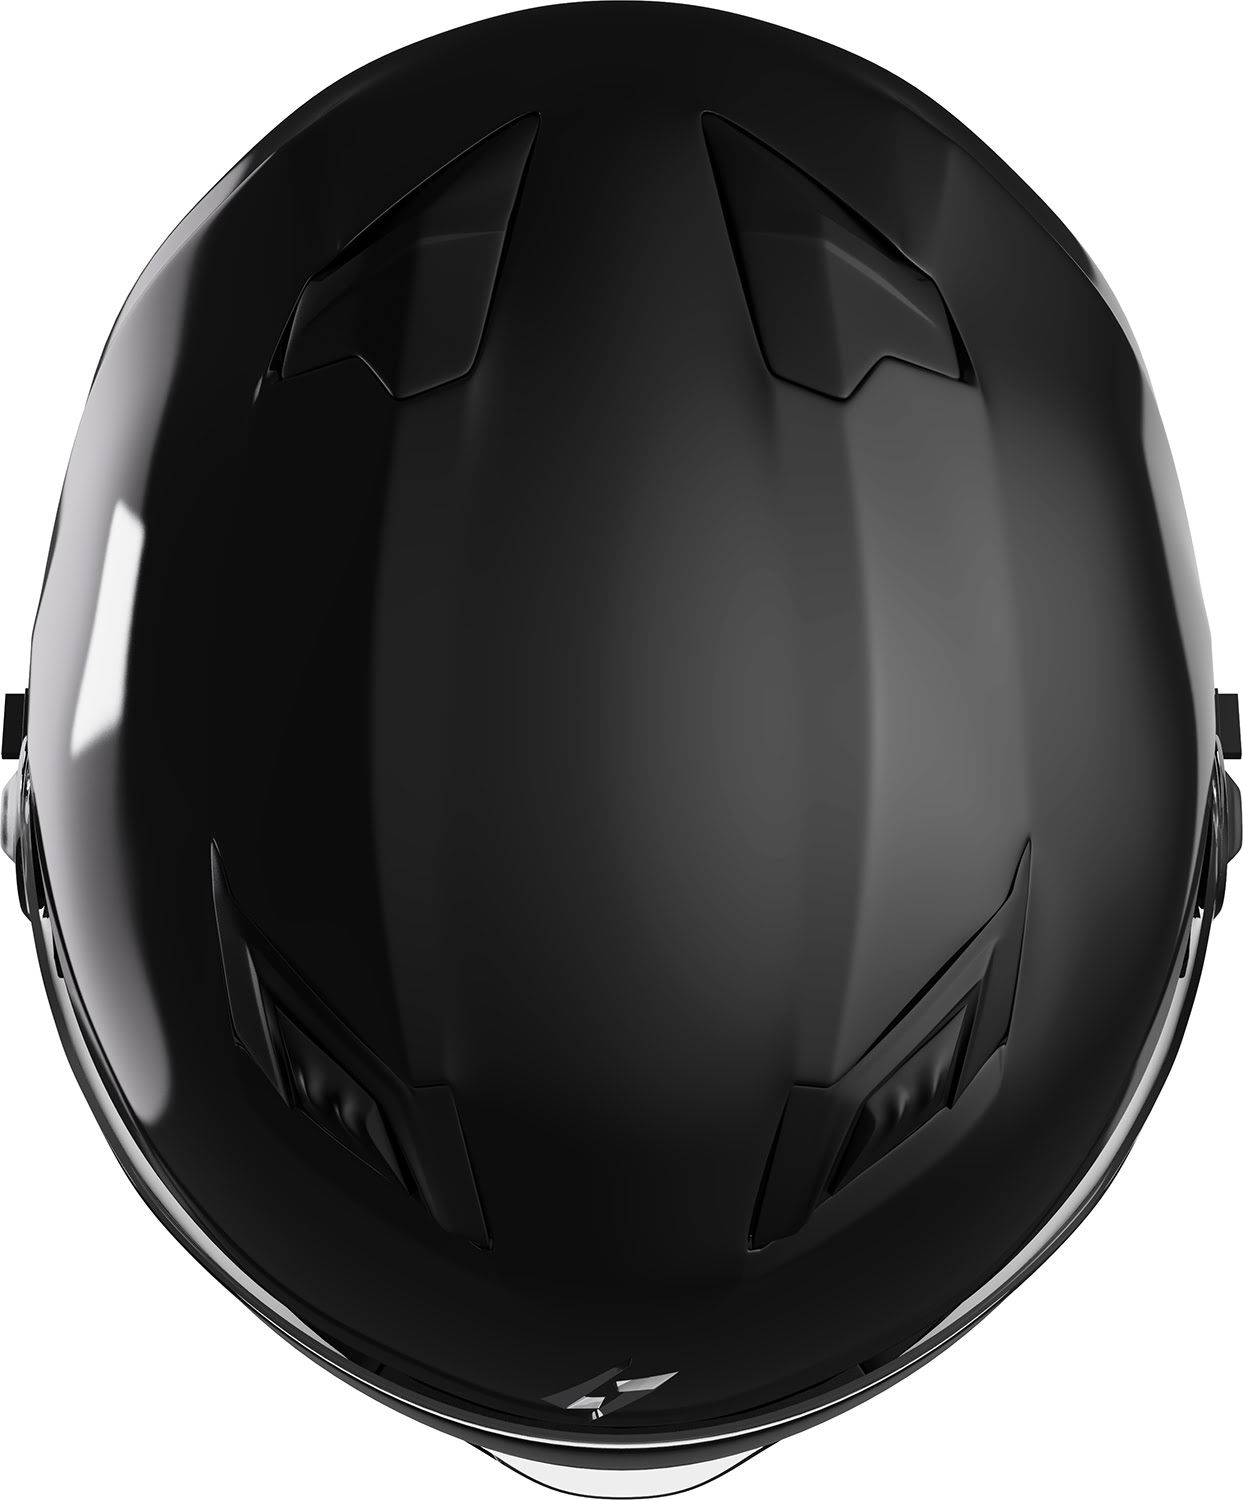 Helmet PUSHER SOLID Black Glossy STORMER 